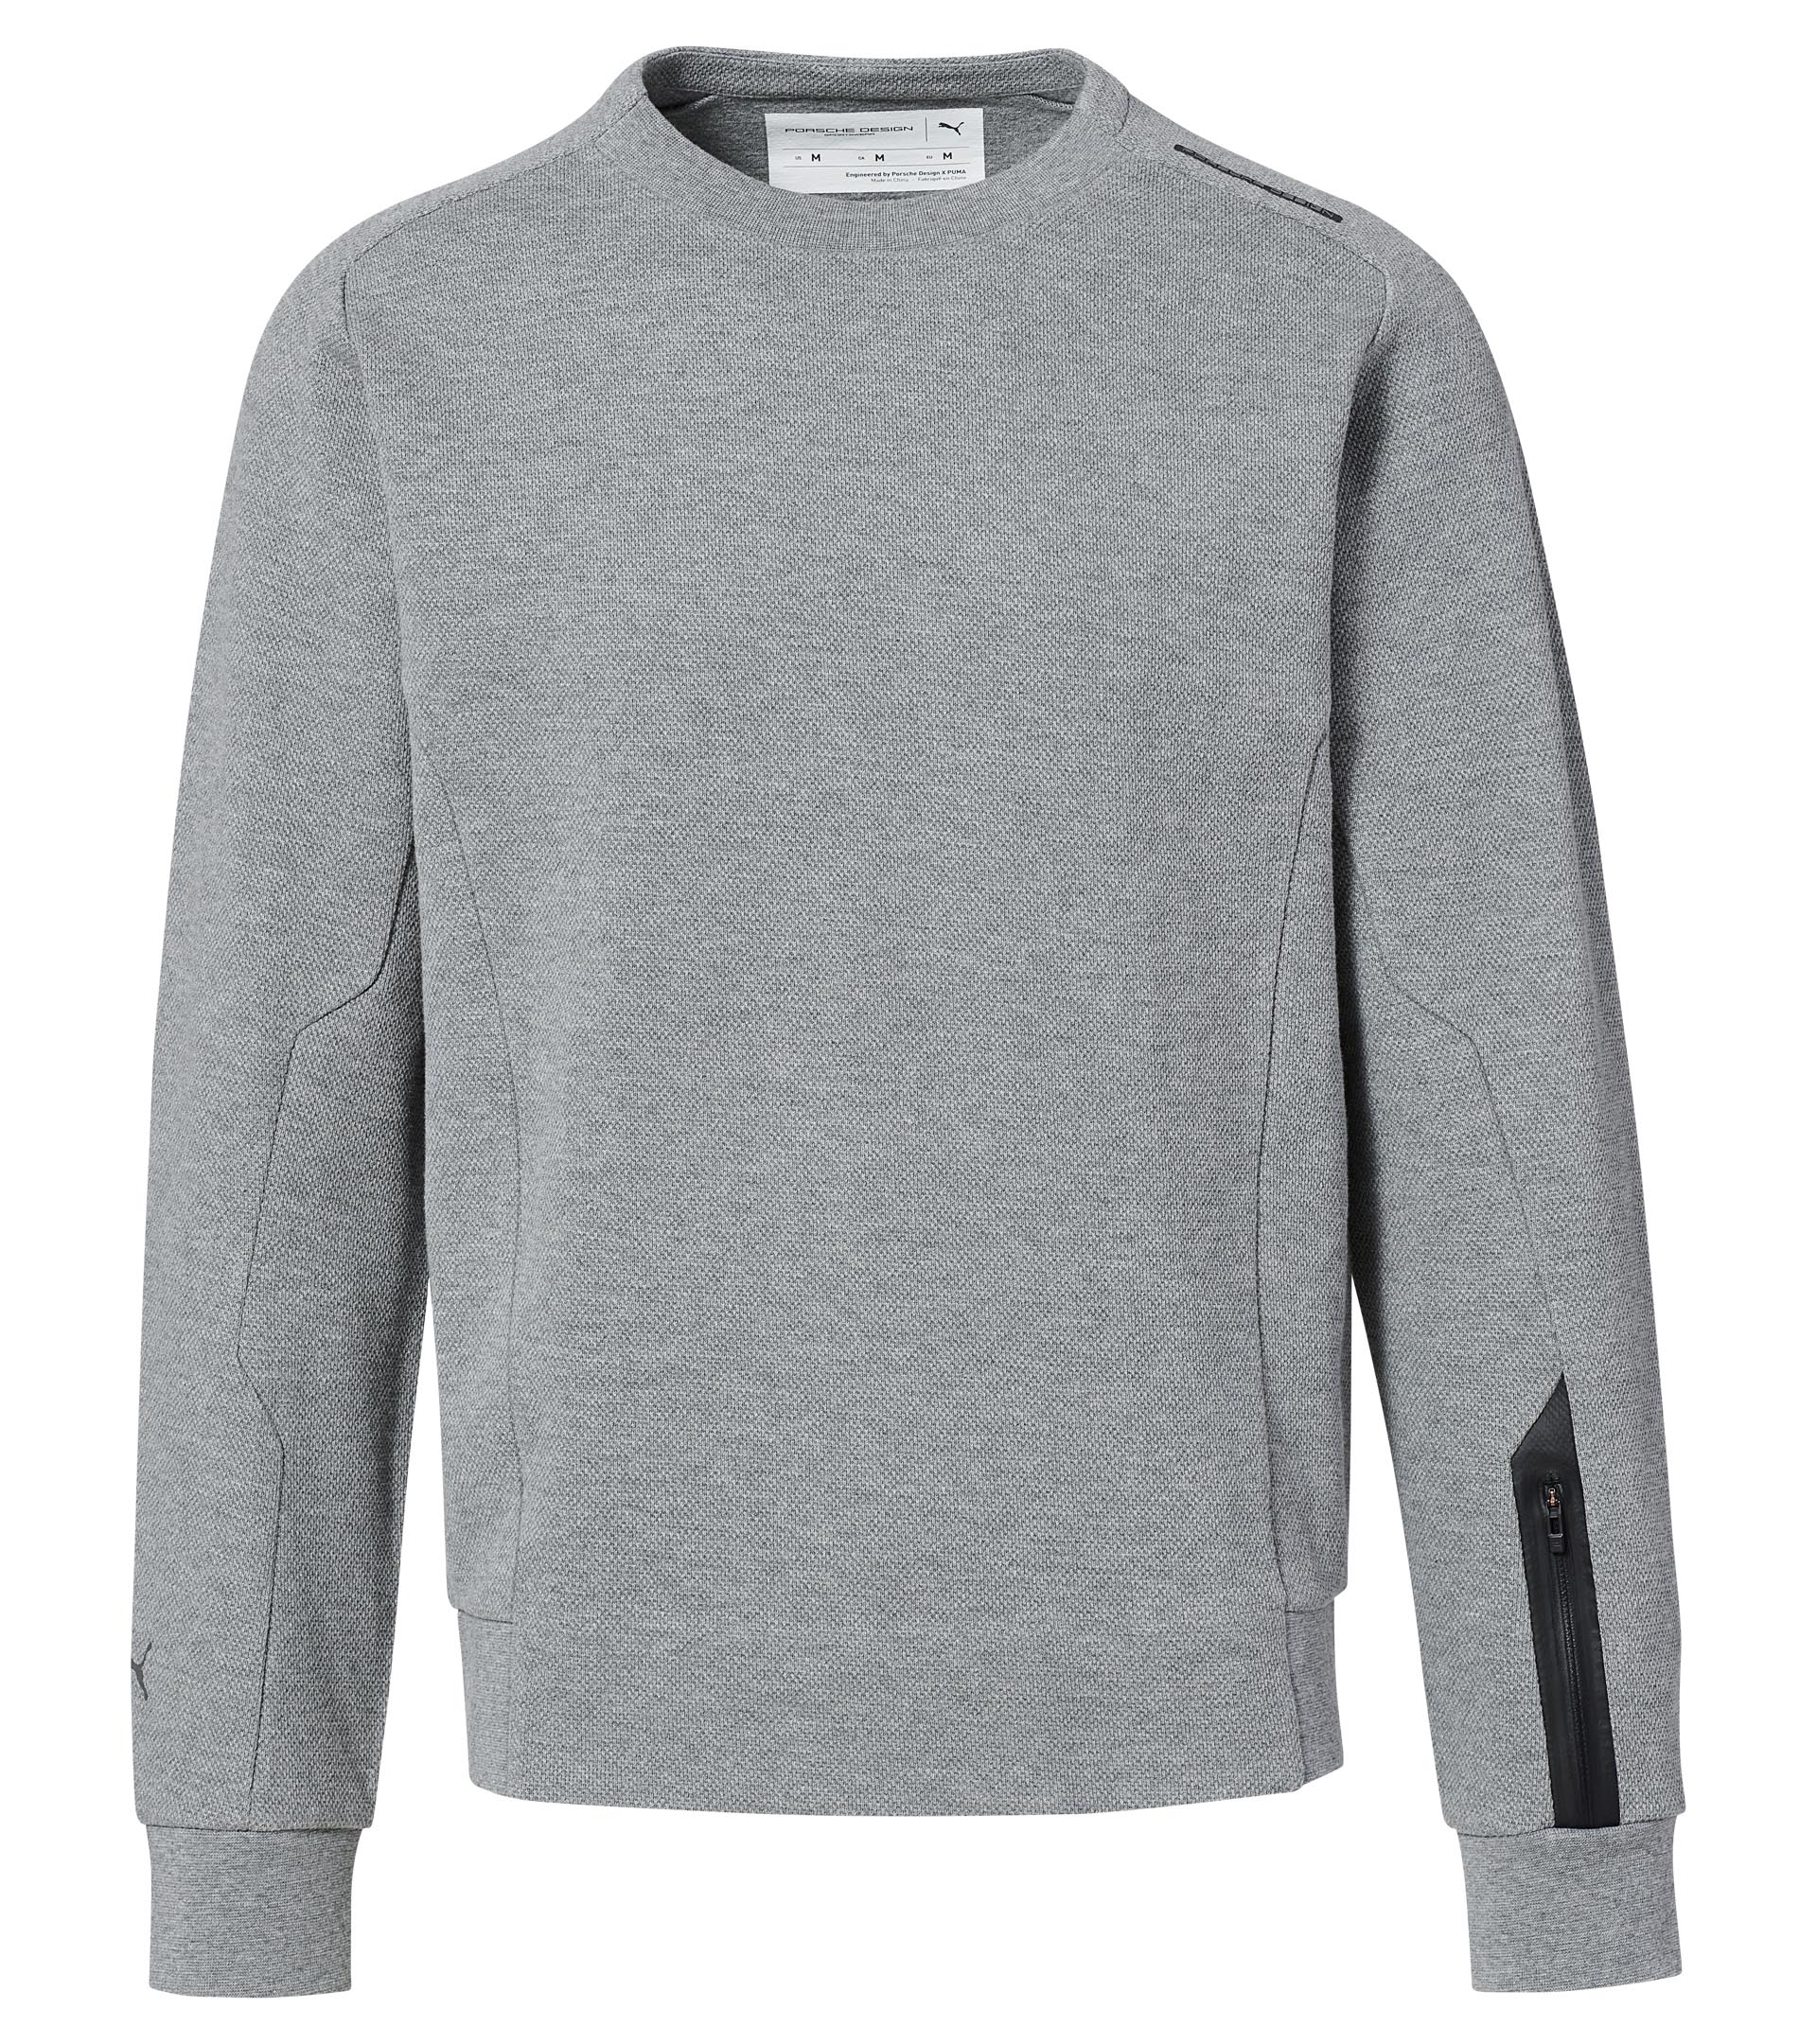 Sweat Crew Long Sleeve - Luxury Sports Sweaters for Men | Porsche ...